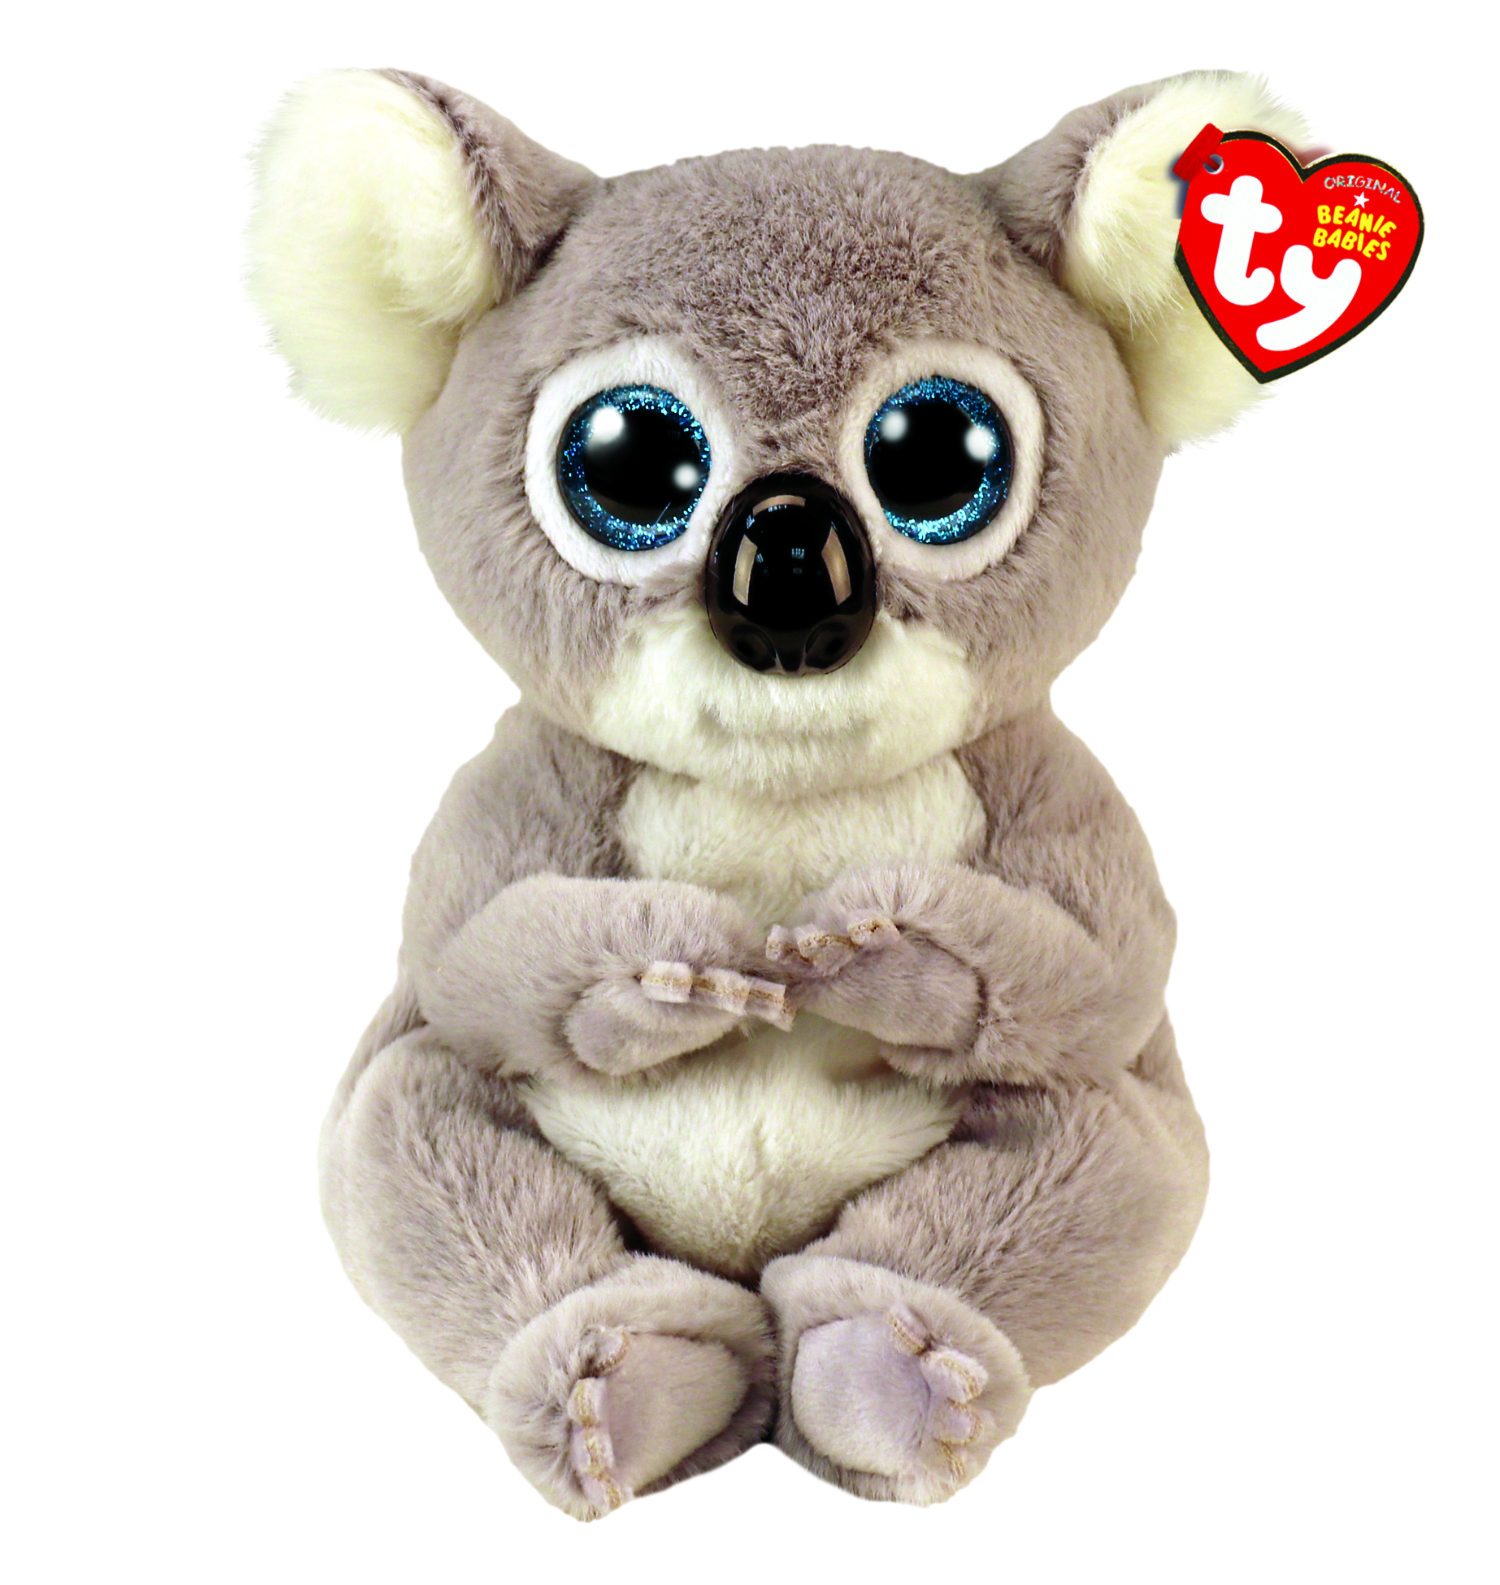 TY Melly Koala Beanie Bellies, 17 cm Plüschtier